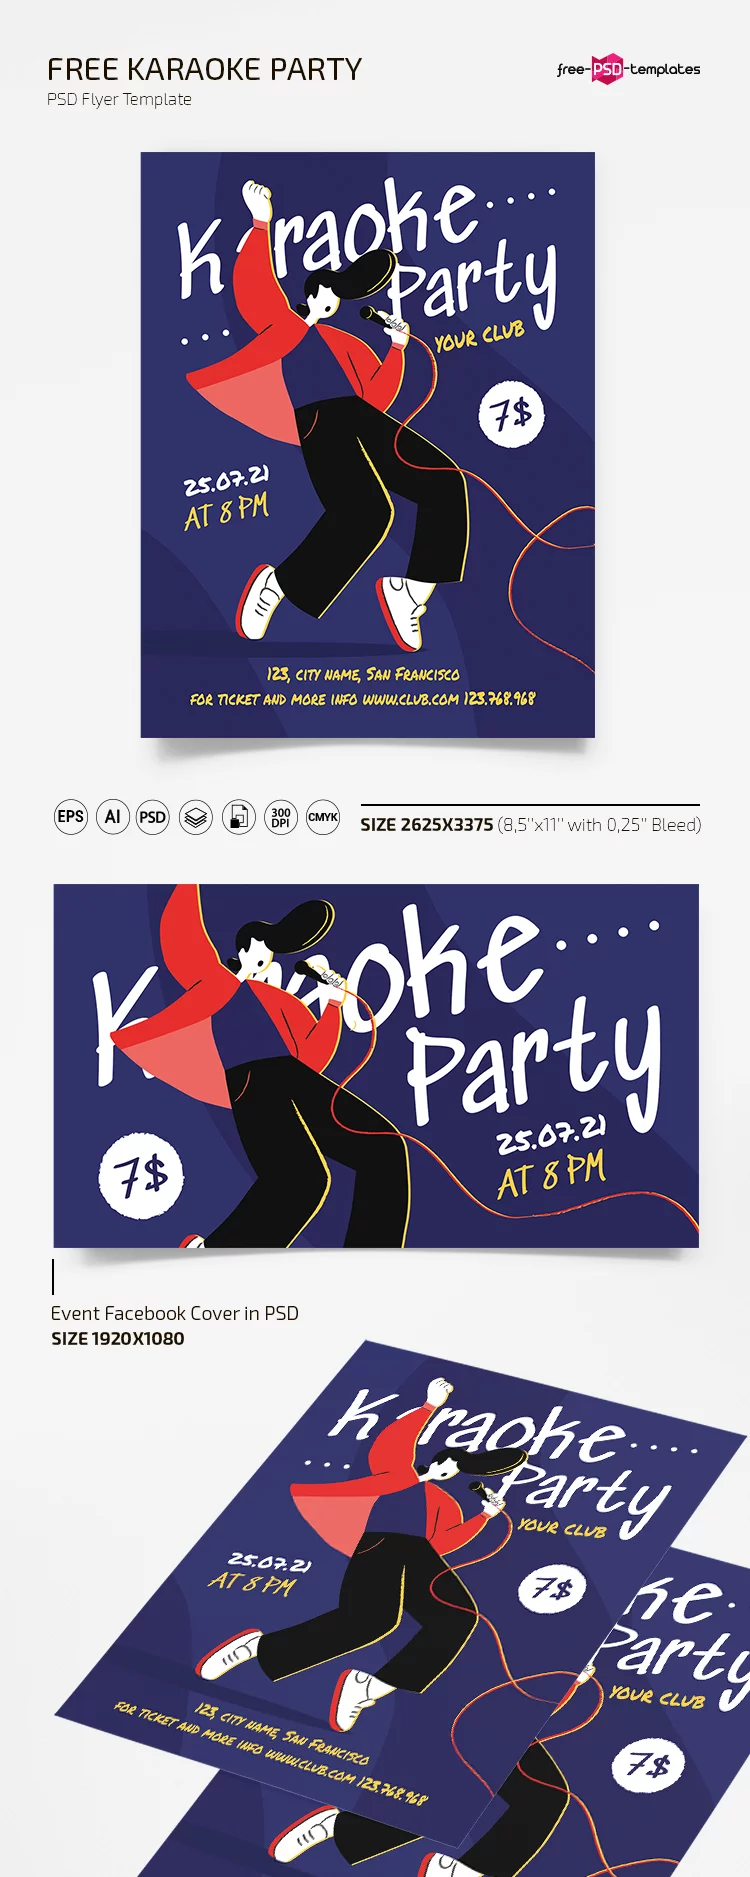 Free Karaoke Party Flyer Templates in PSD + Vector (.ai+.eps)